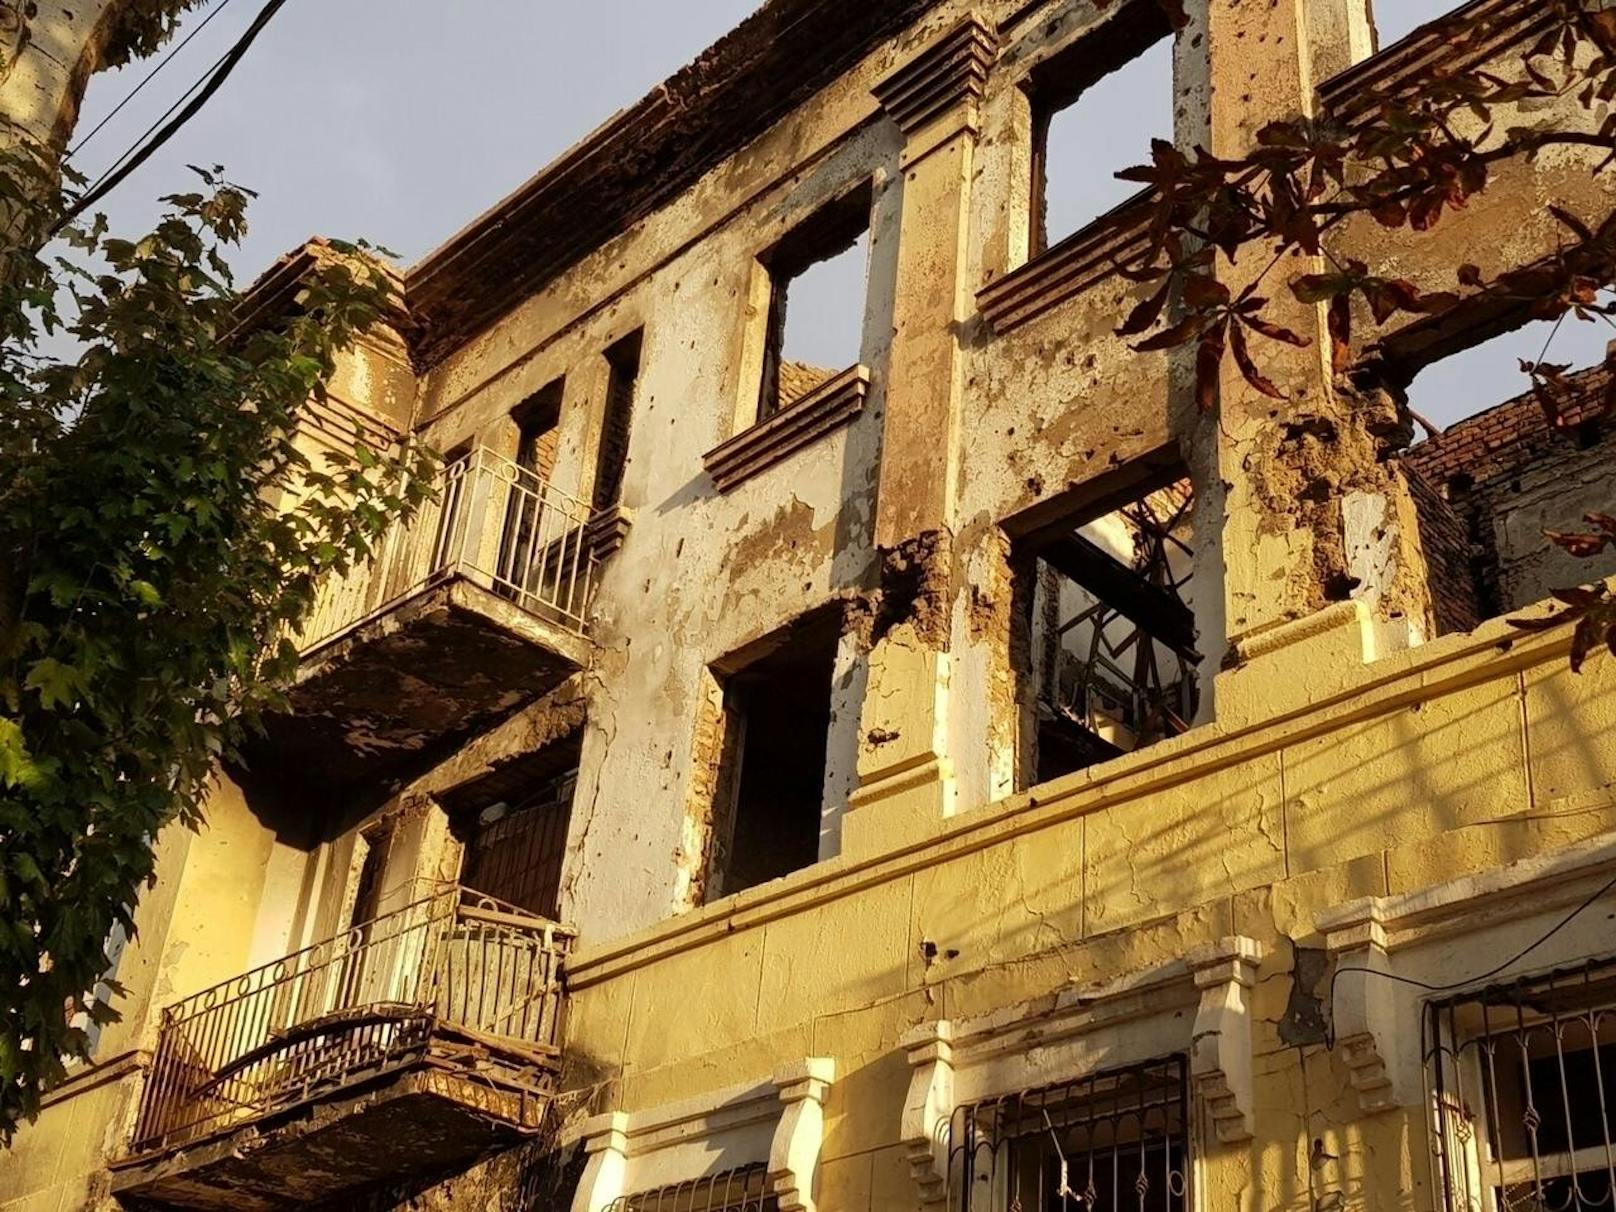 Schaurig-schön: Verlassenes Gebäude, zerschossene Fassade